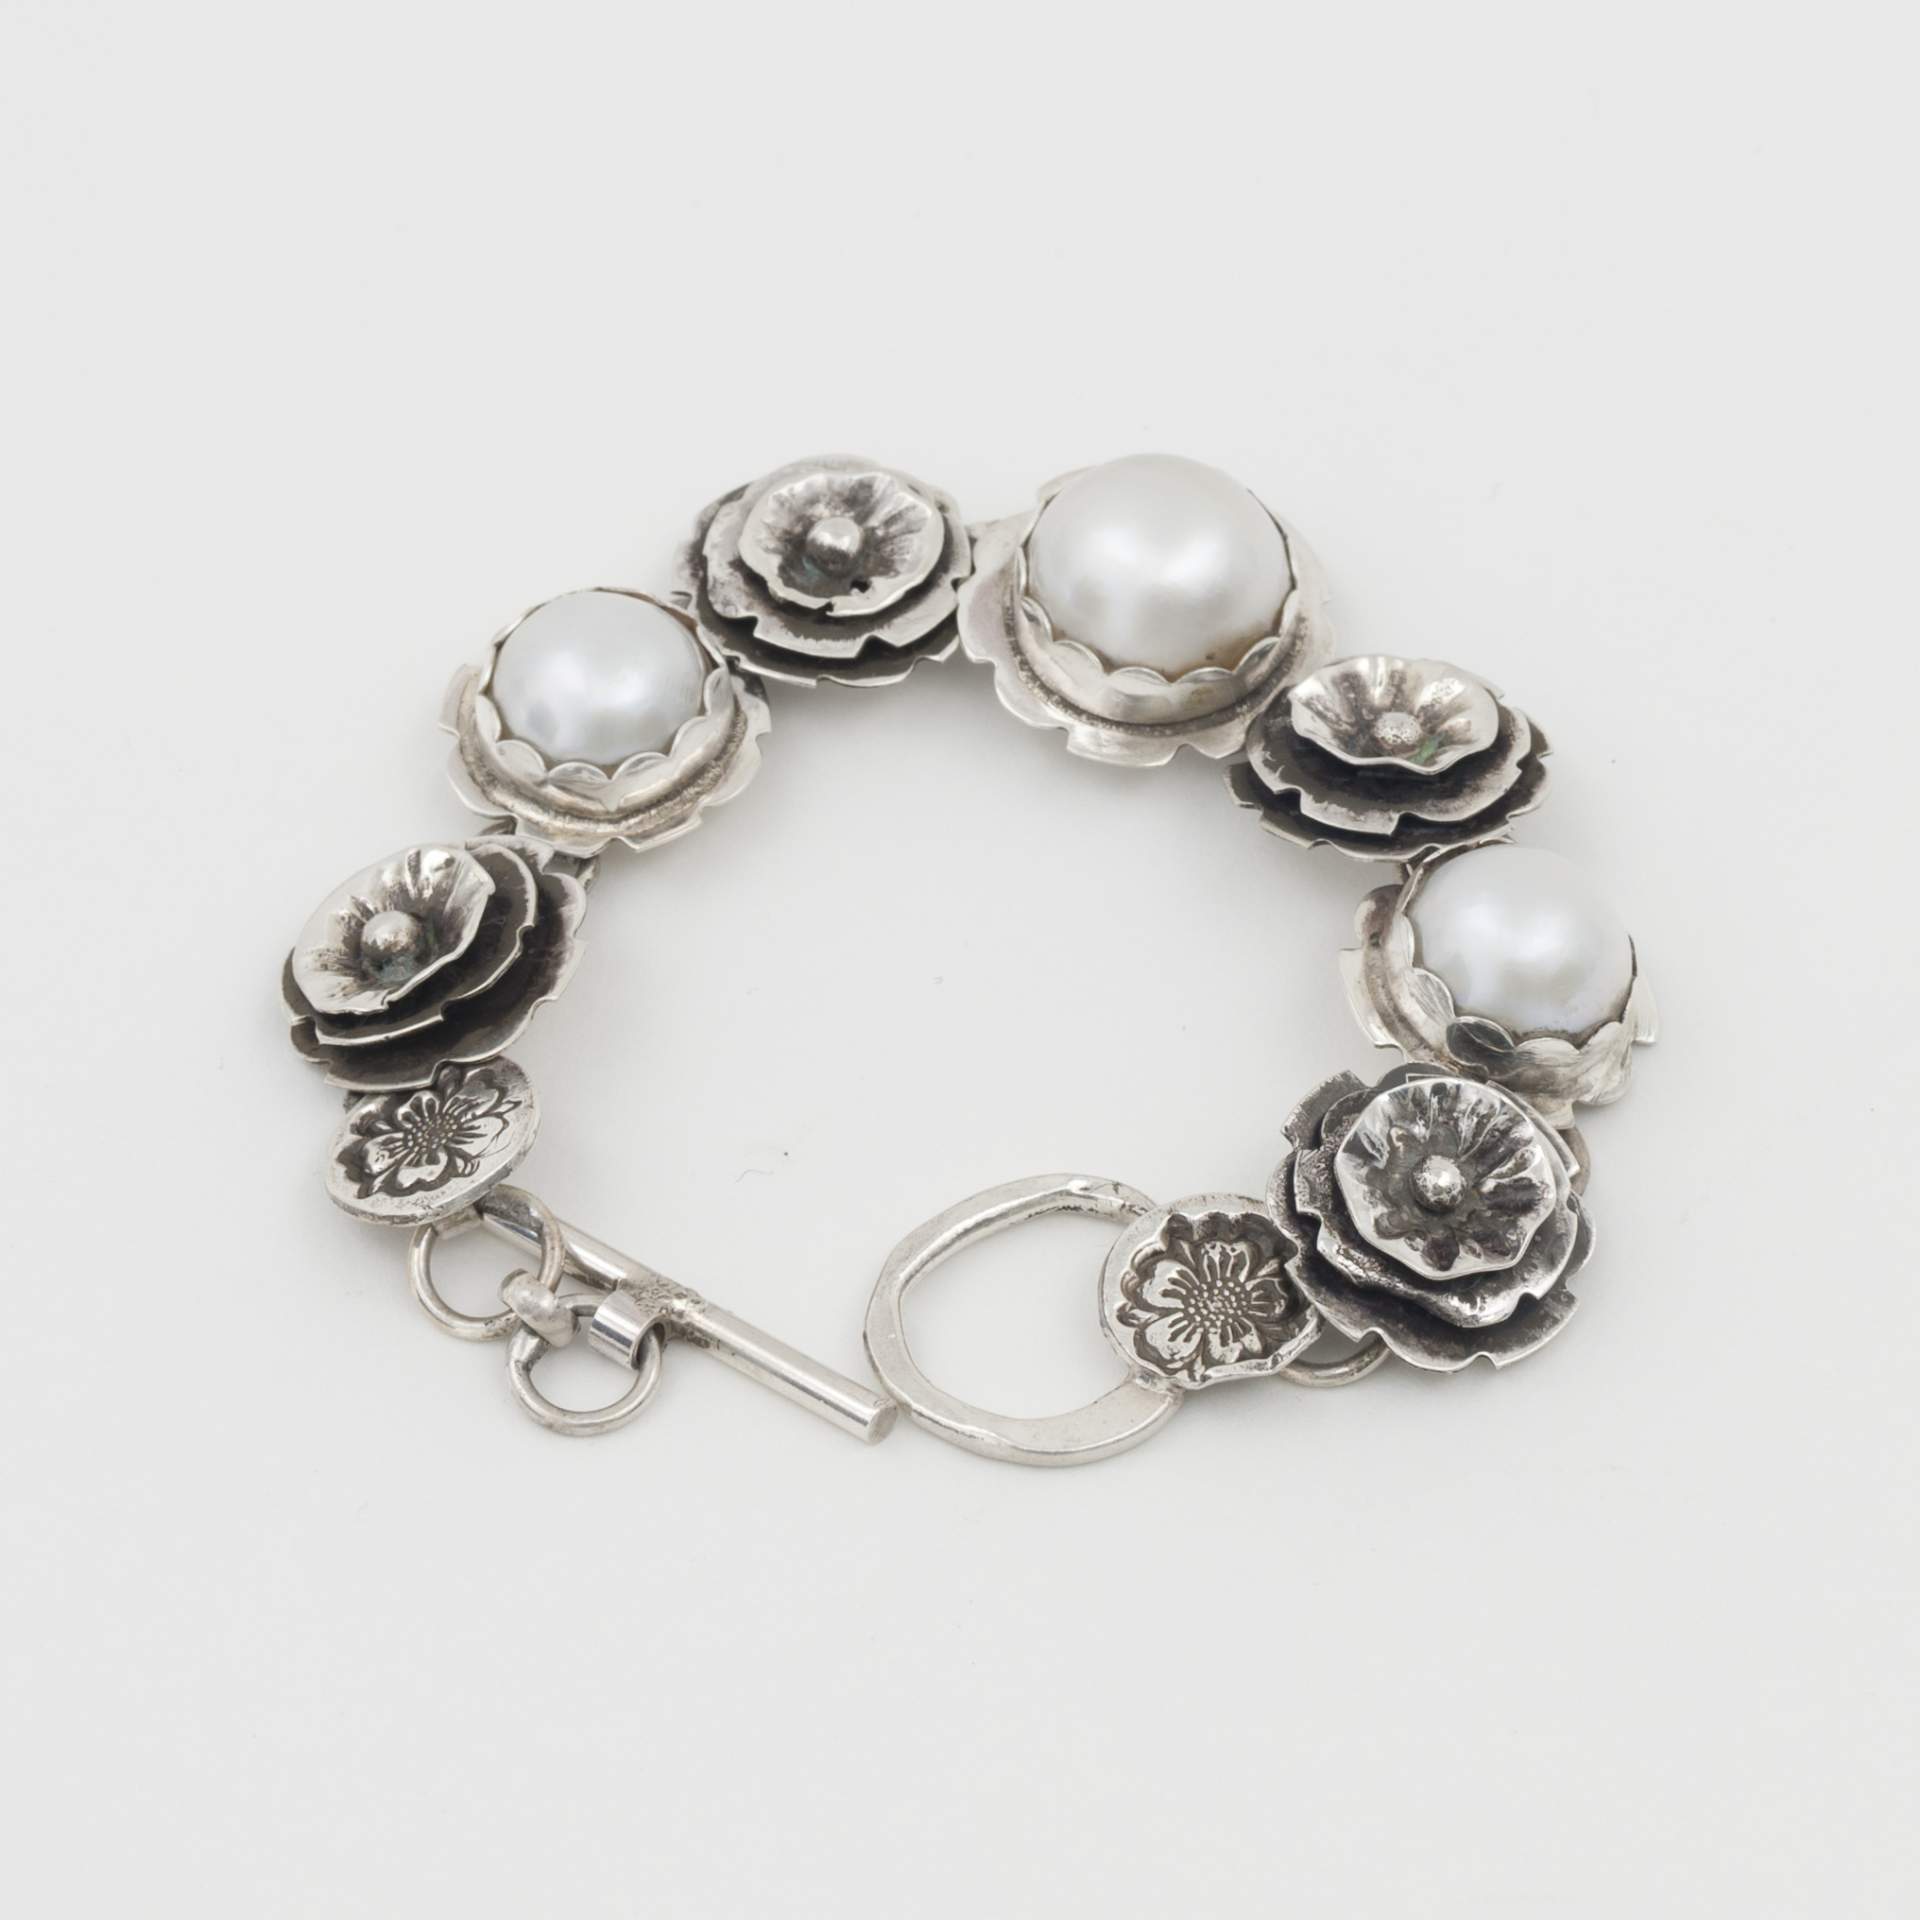 Pearl and Flower Bracelet